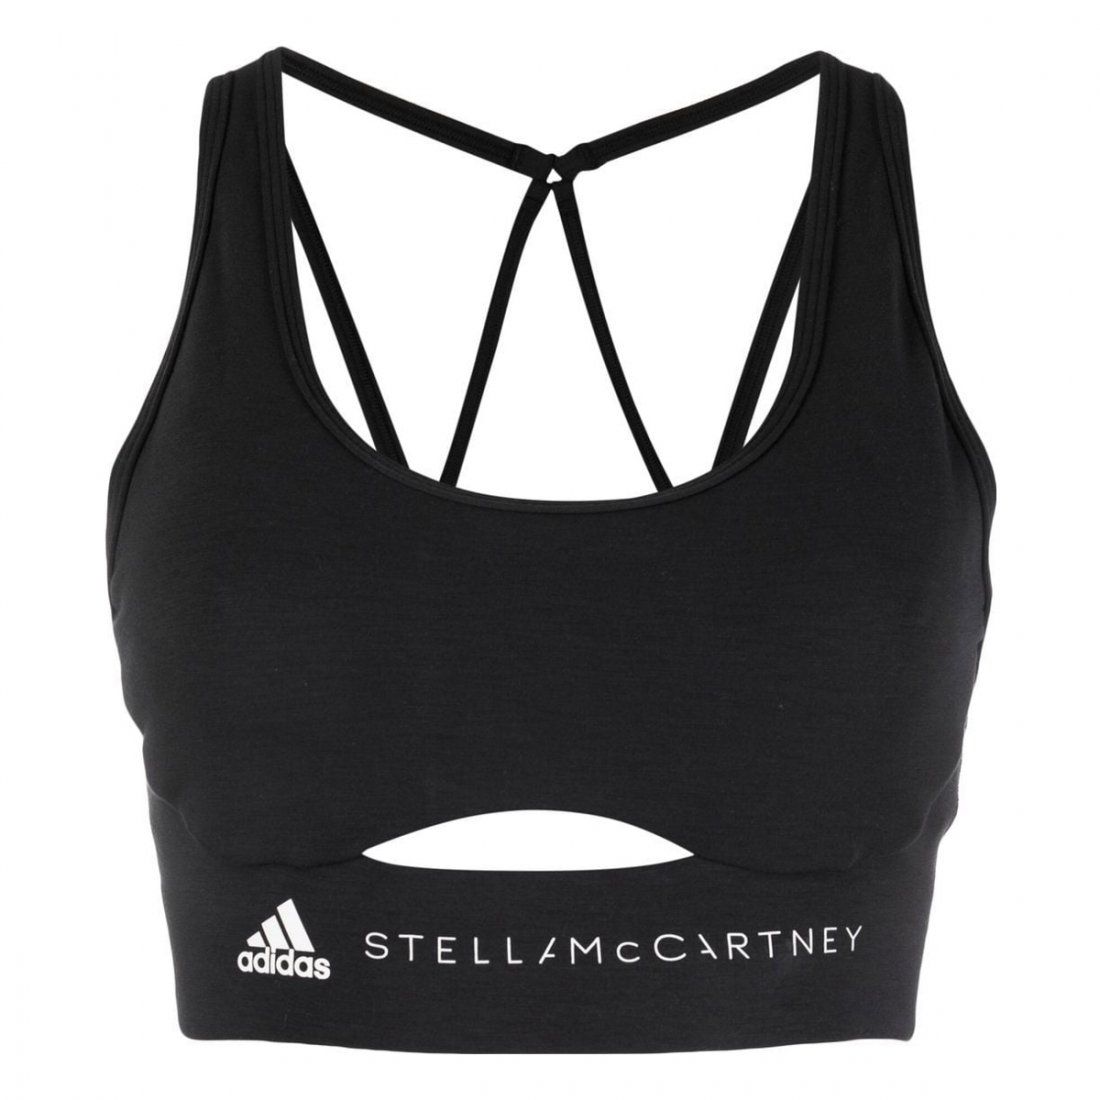 Adidas by Stella McCartney - Haut de sport 'Logo' pour Femmes